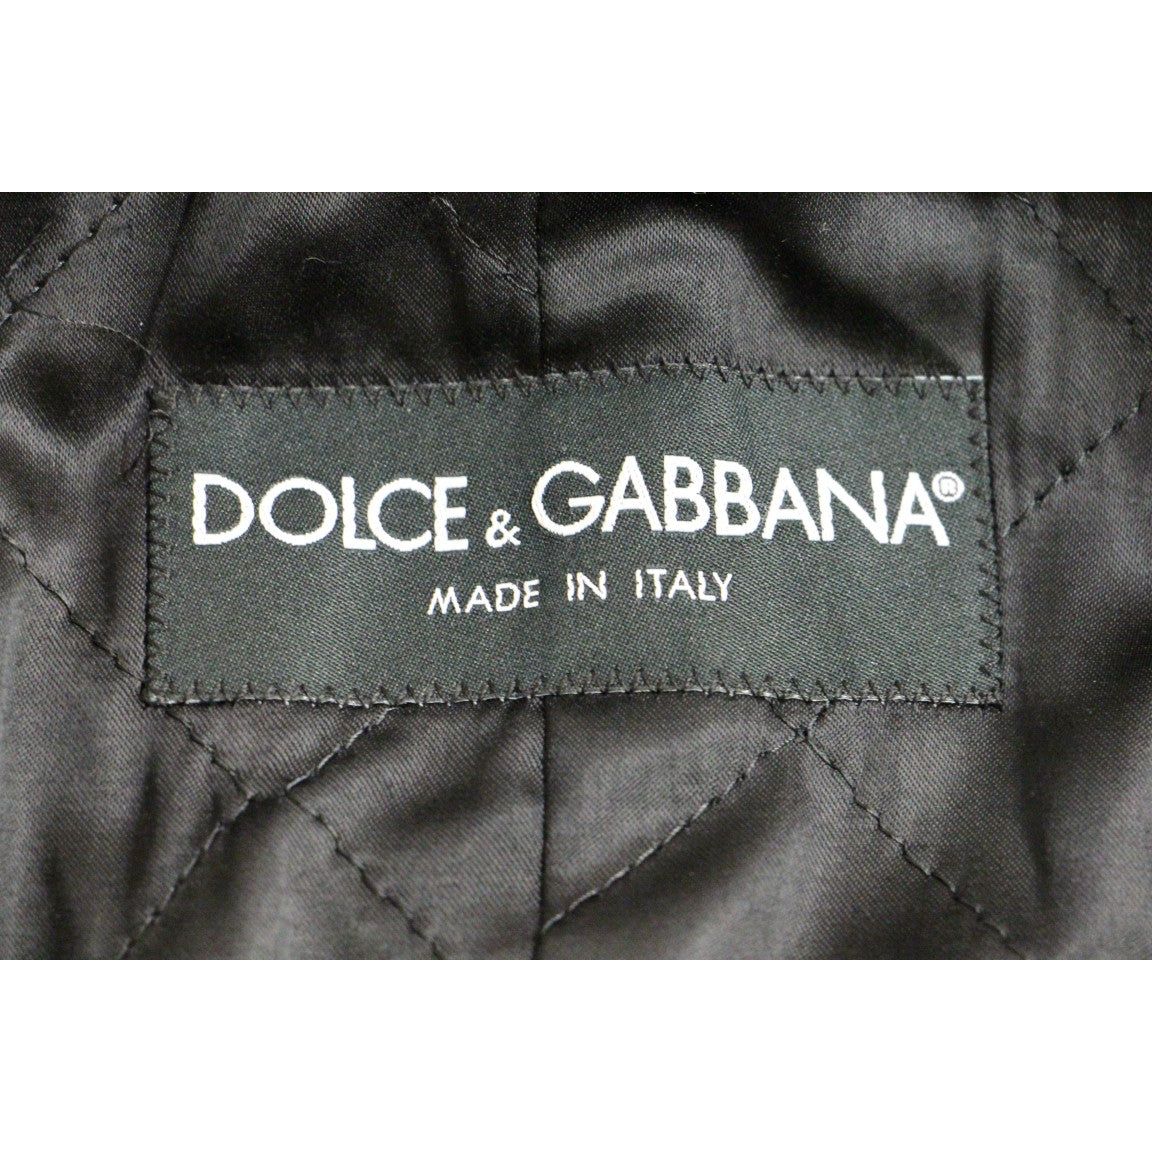 Dolce & Gabbana Sicilia Checkered Wool Blend Coat Coats & Jackets gray-double-breasted-coat-jacket 53557-gray-double-breasted-coat-jacket-6.jpg